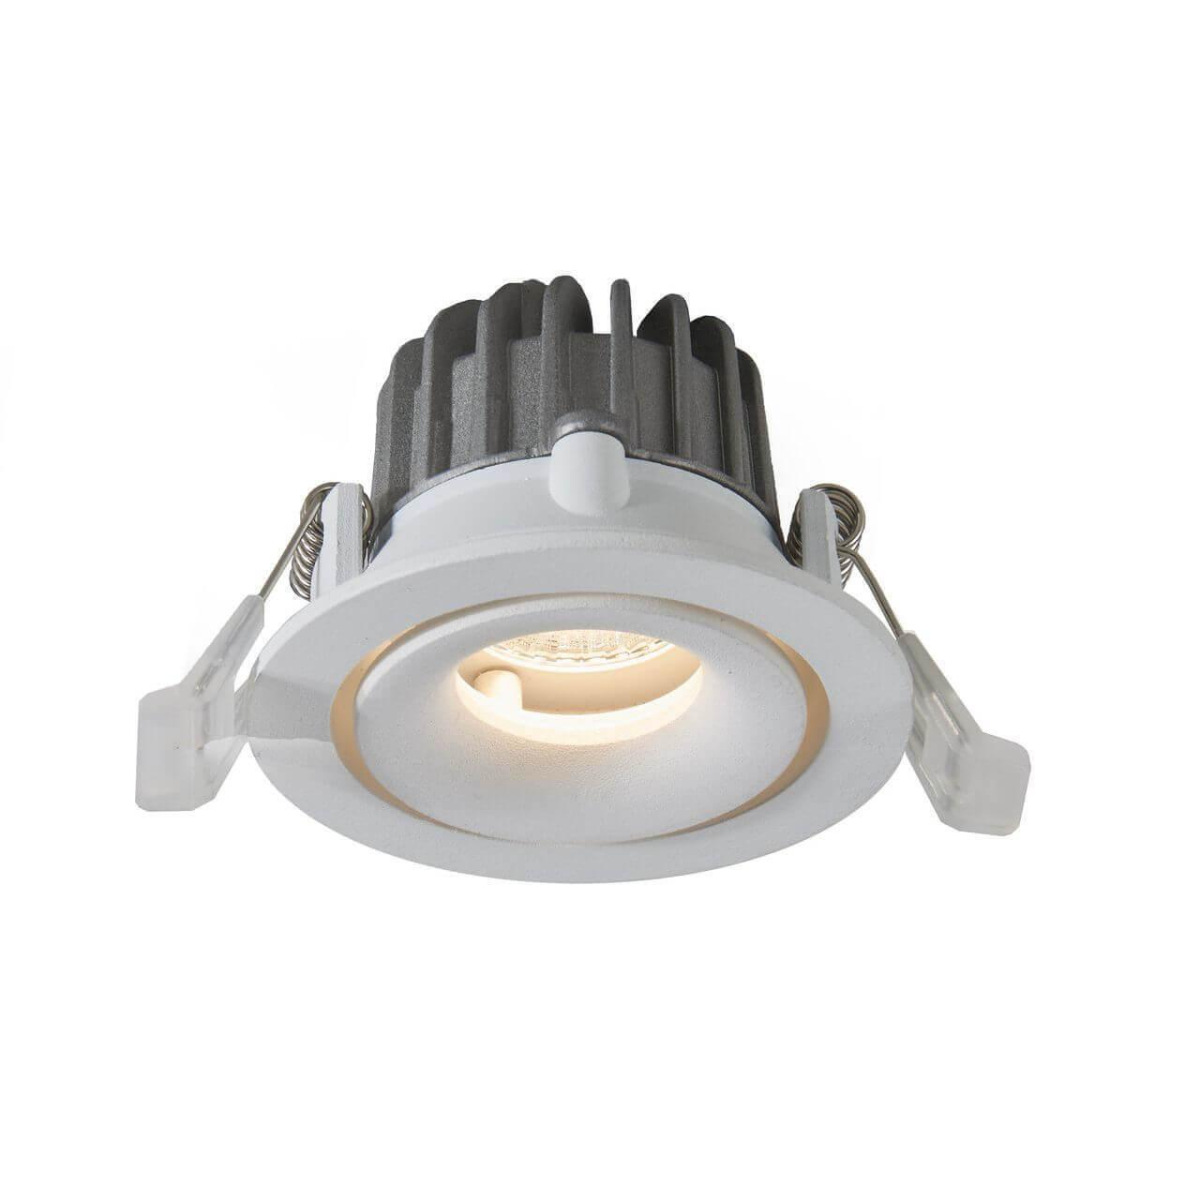 Встраиваемый светильник Arte Lamp APERTURA A3310PL-1WH high quality poa lmp65 projector lamp bulbs for eikilc xb15 canon lv 5210 lv 5220 christie lx25a sanyo plc xu50 xu5002 xu5003